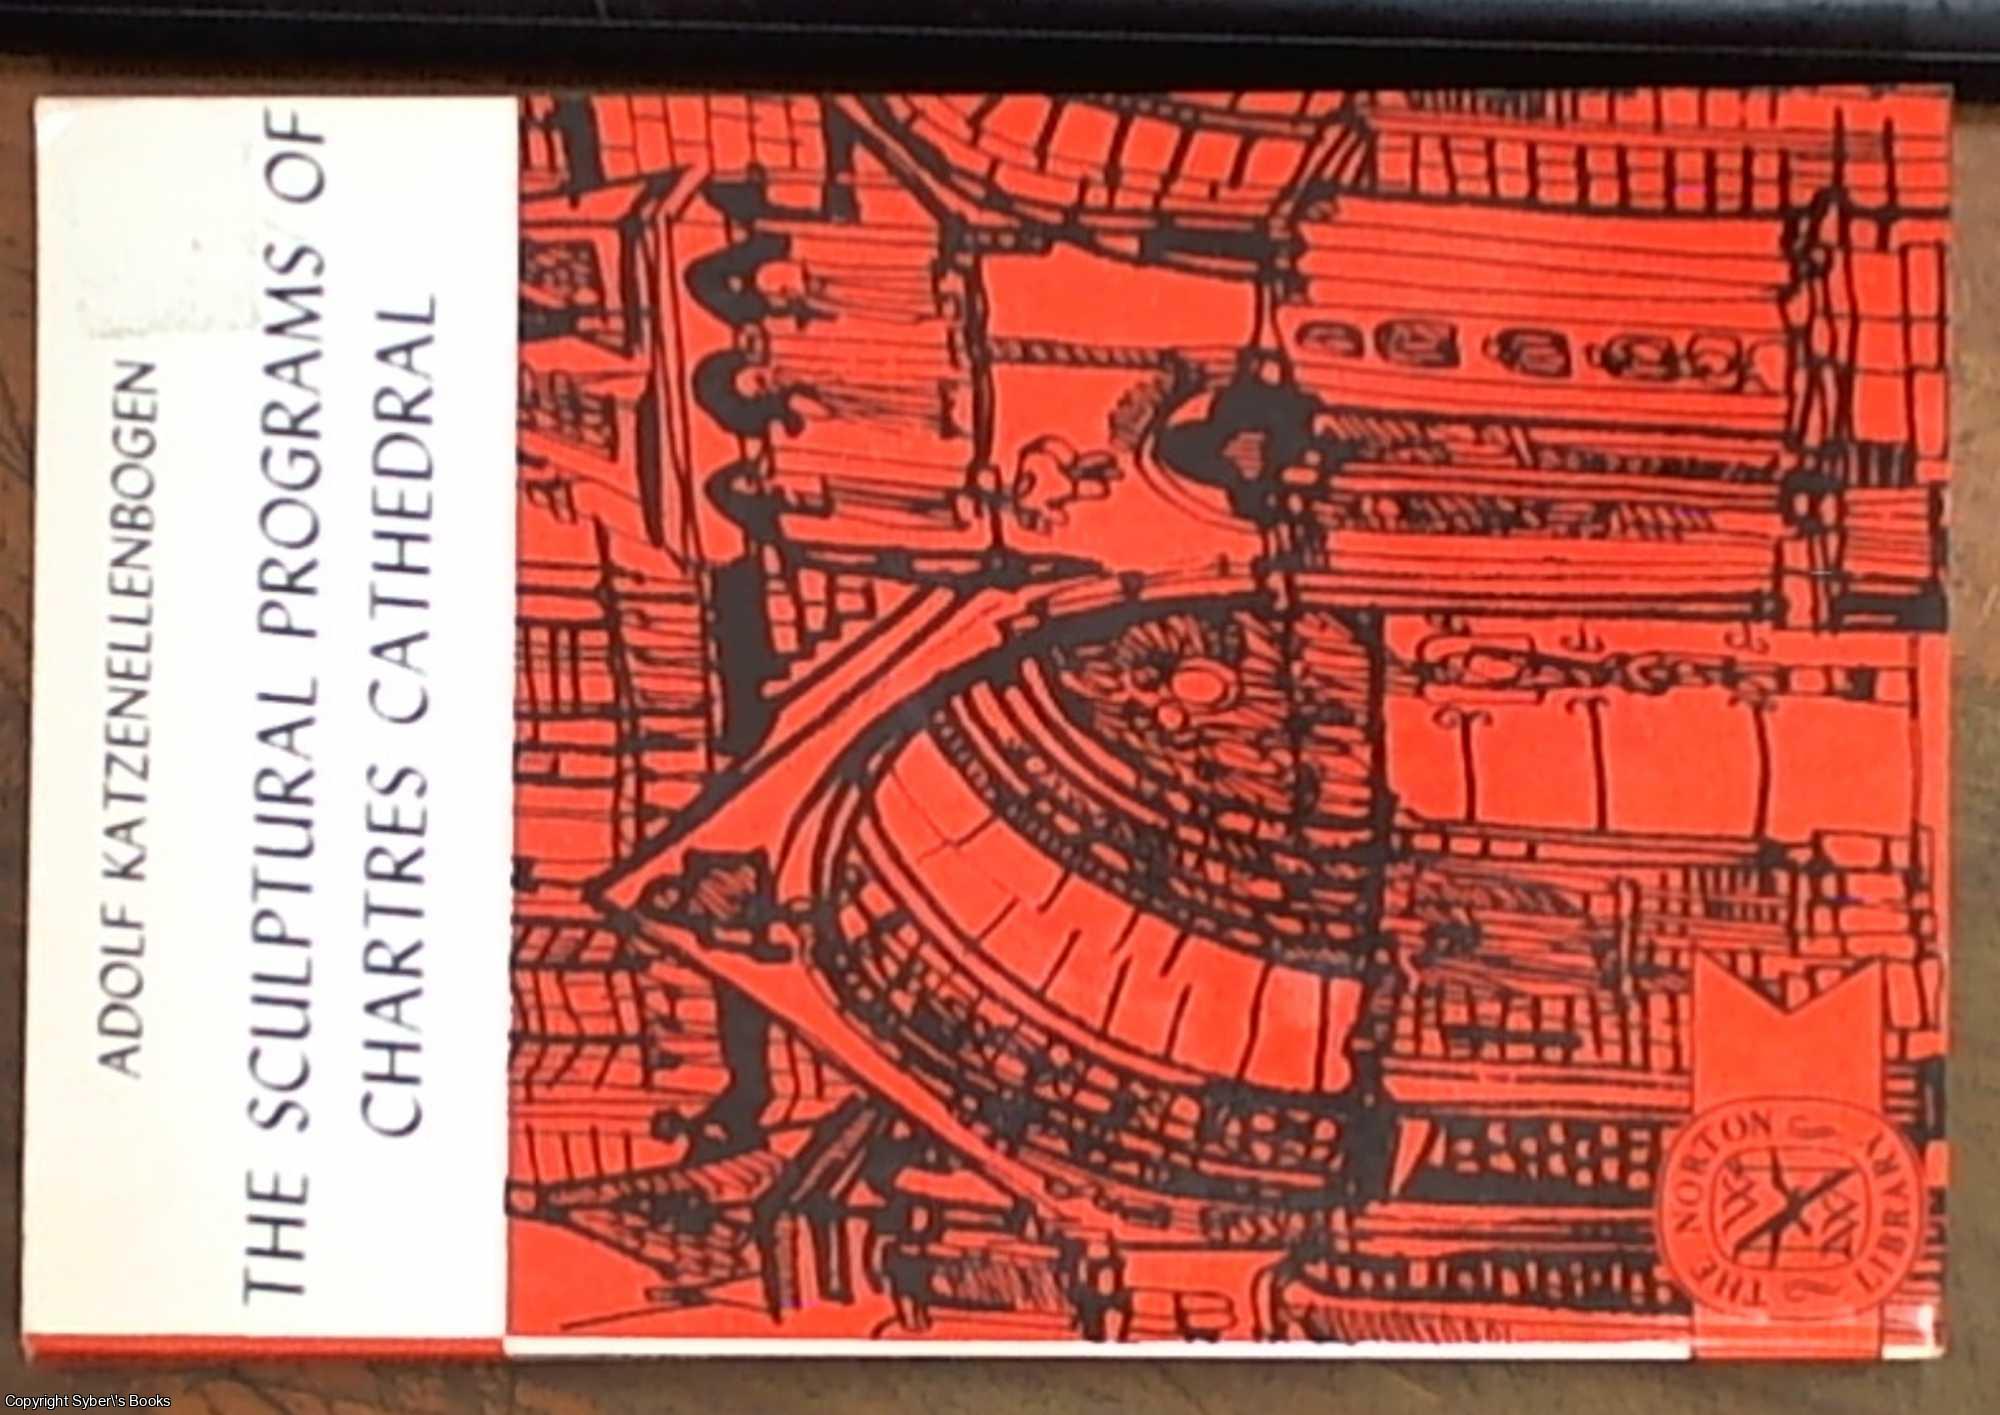 Katzenellenbogen, Adolf - The Sculptural Programs of Chartres Cathedral